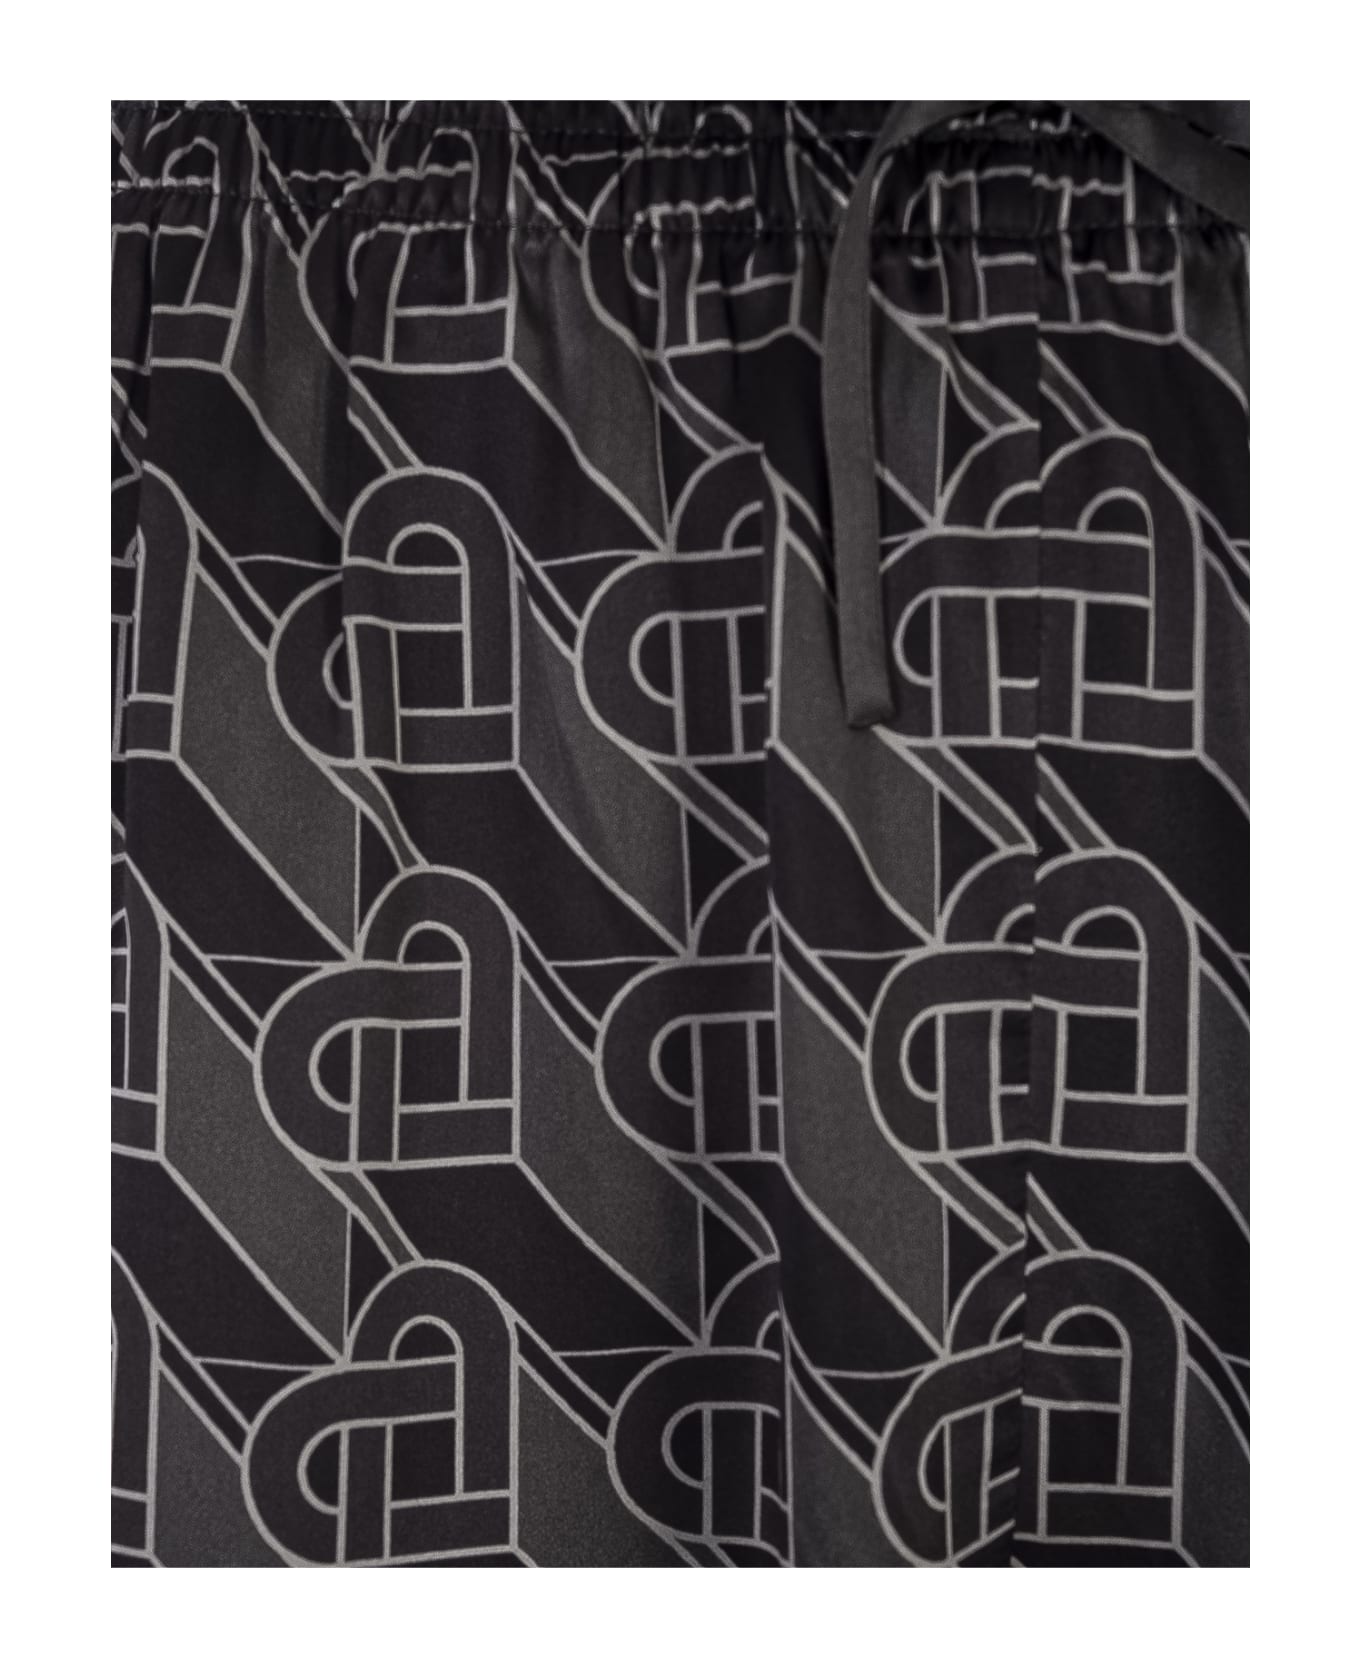 Casablanca Heart Monogram Pyjama Silk Trousers - Black